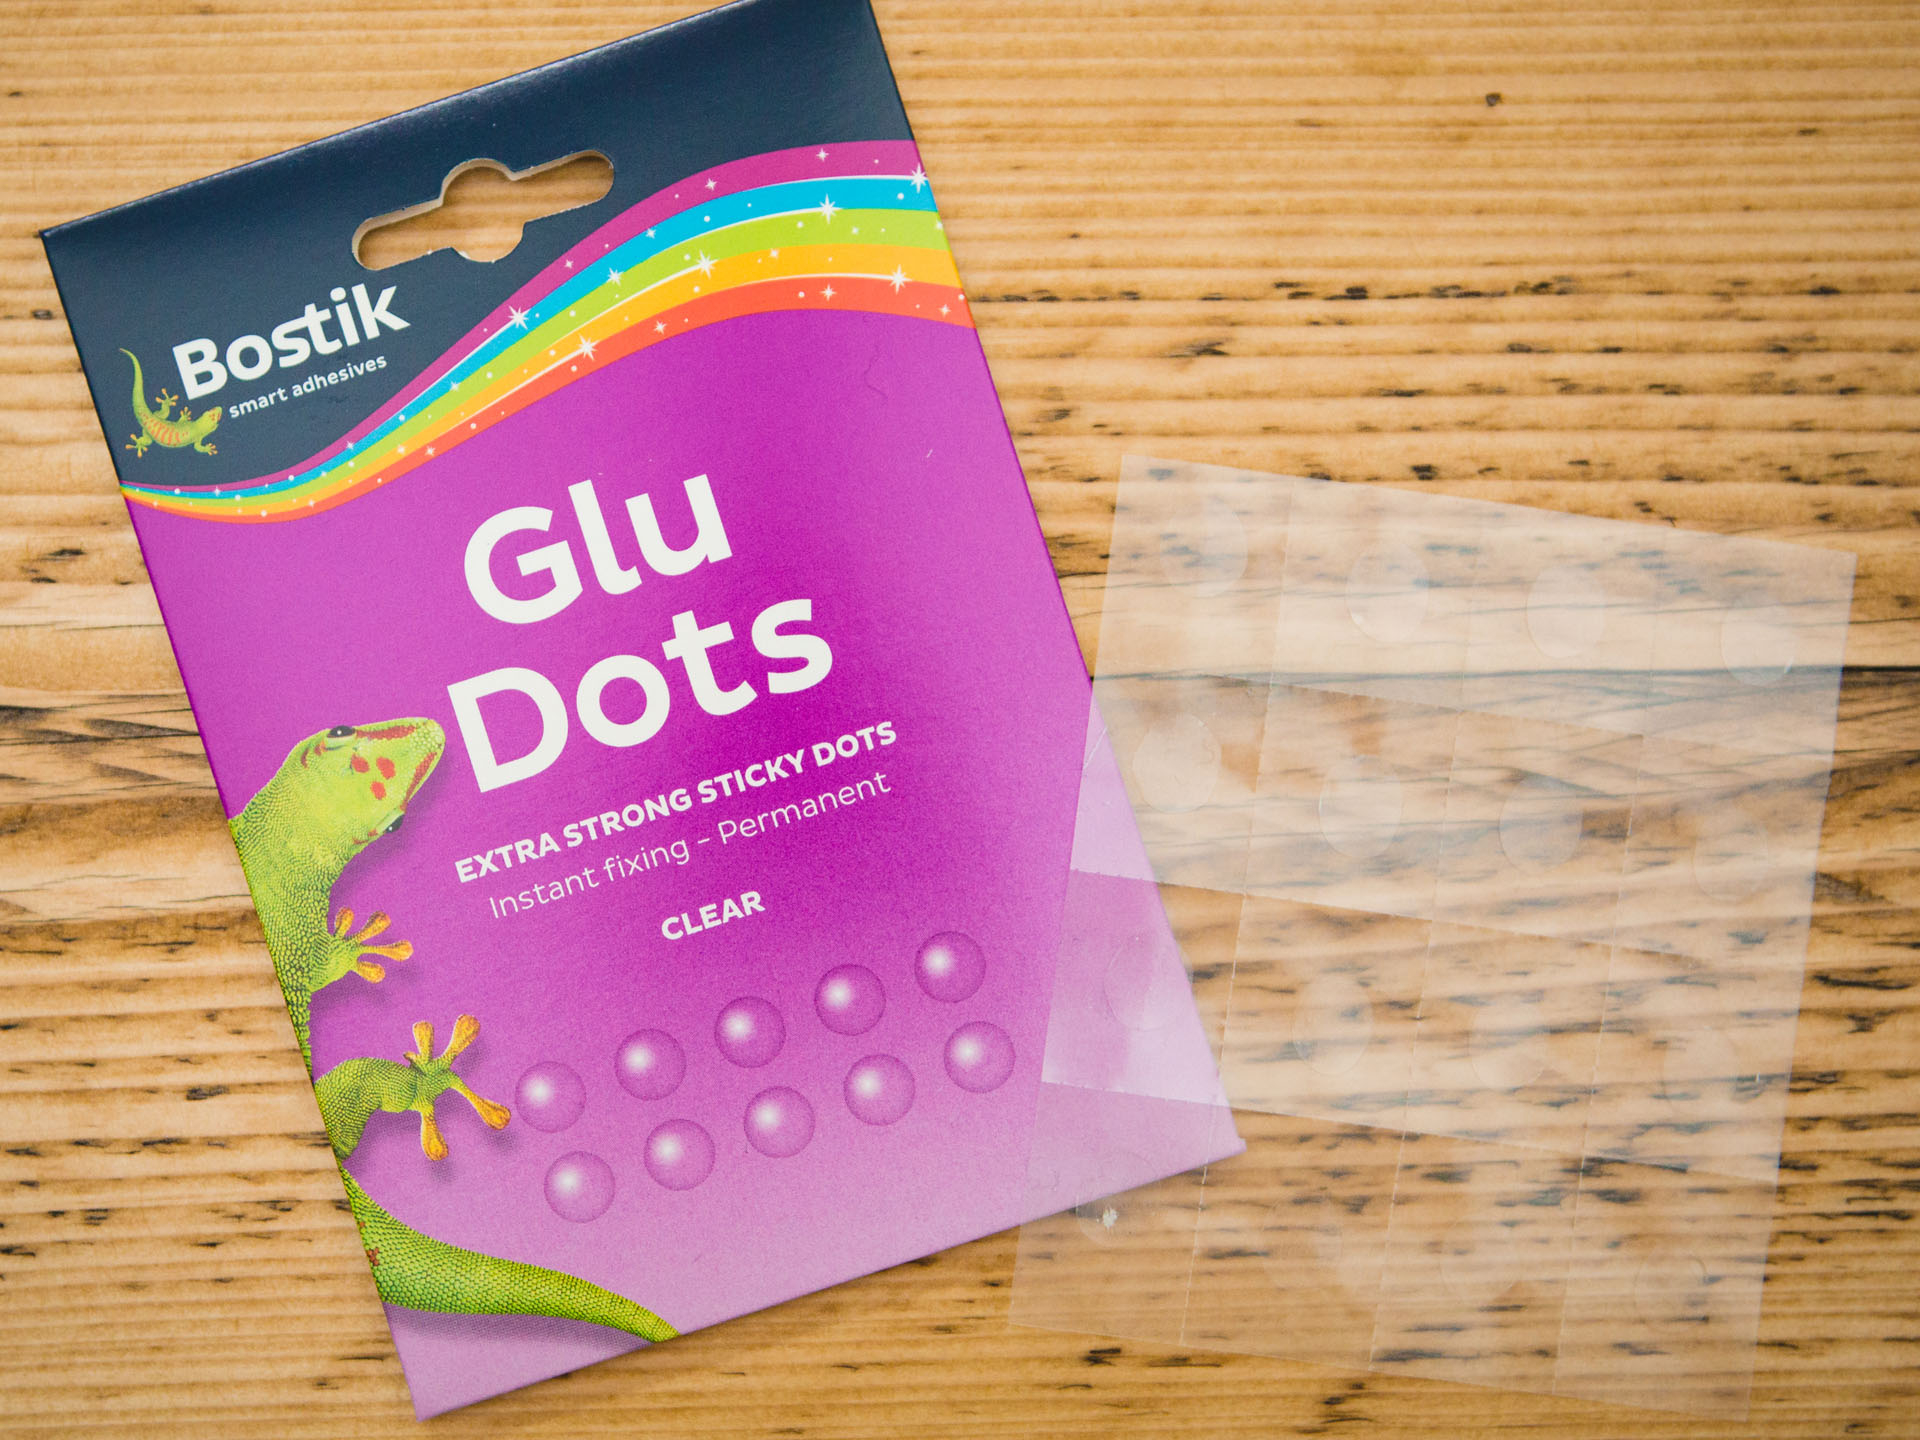 Bostik DIY Glu Dots White United Kingdom Packshot Version 2